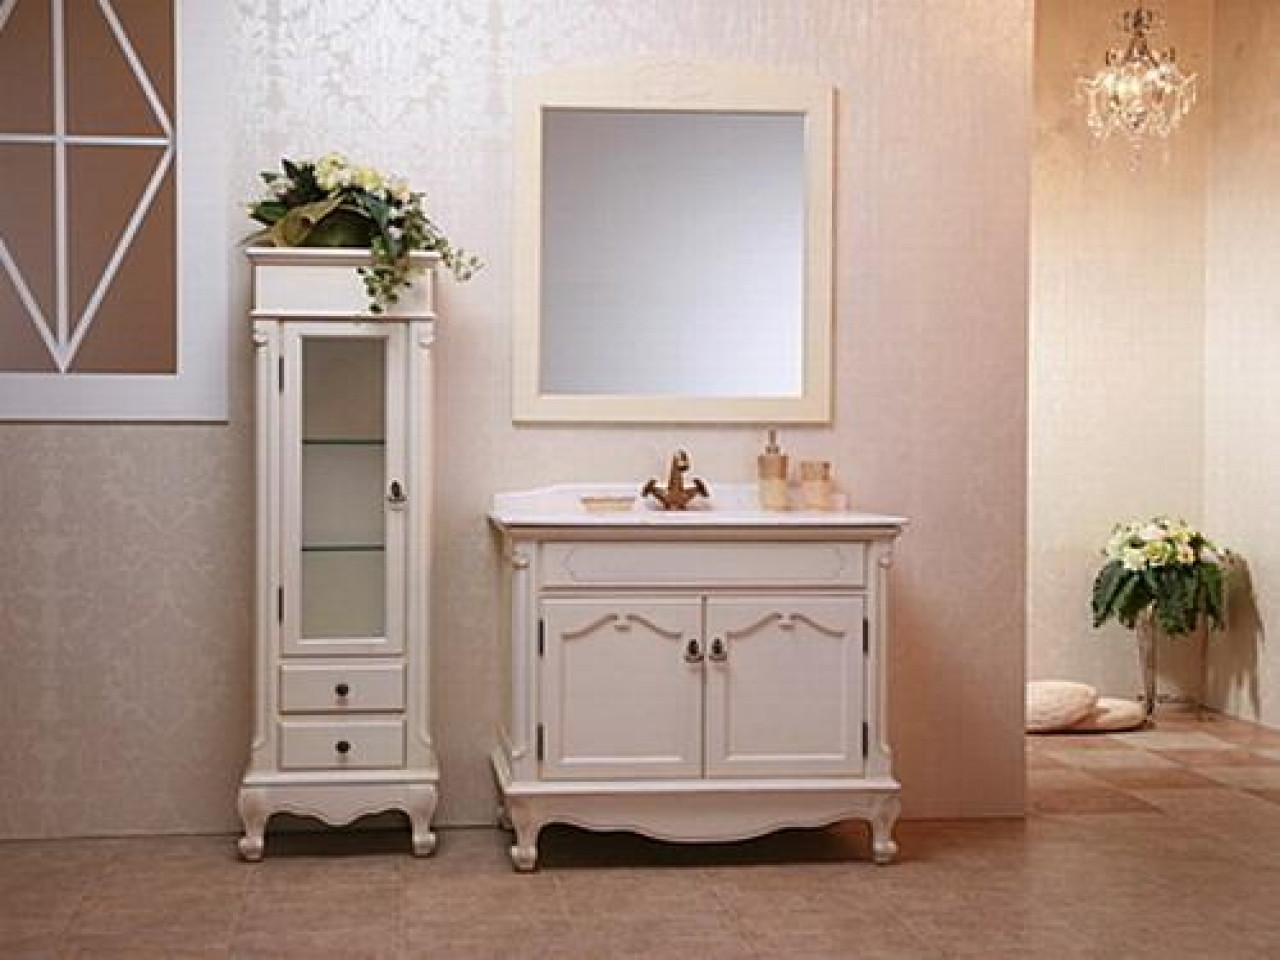 All Wood Bathroom Vanities
 Bathroom counter cabinet wood bathroom vanity cabinets